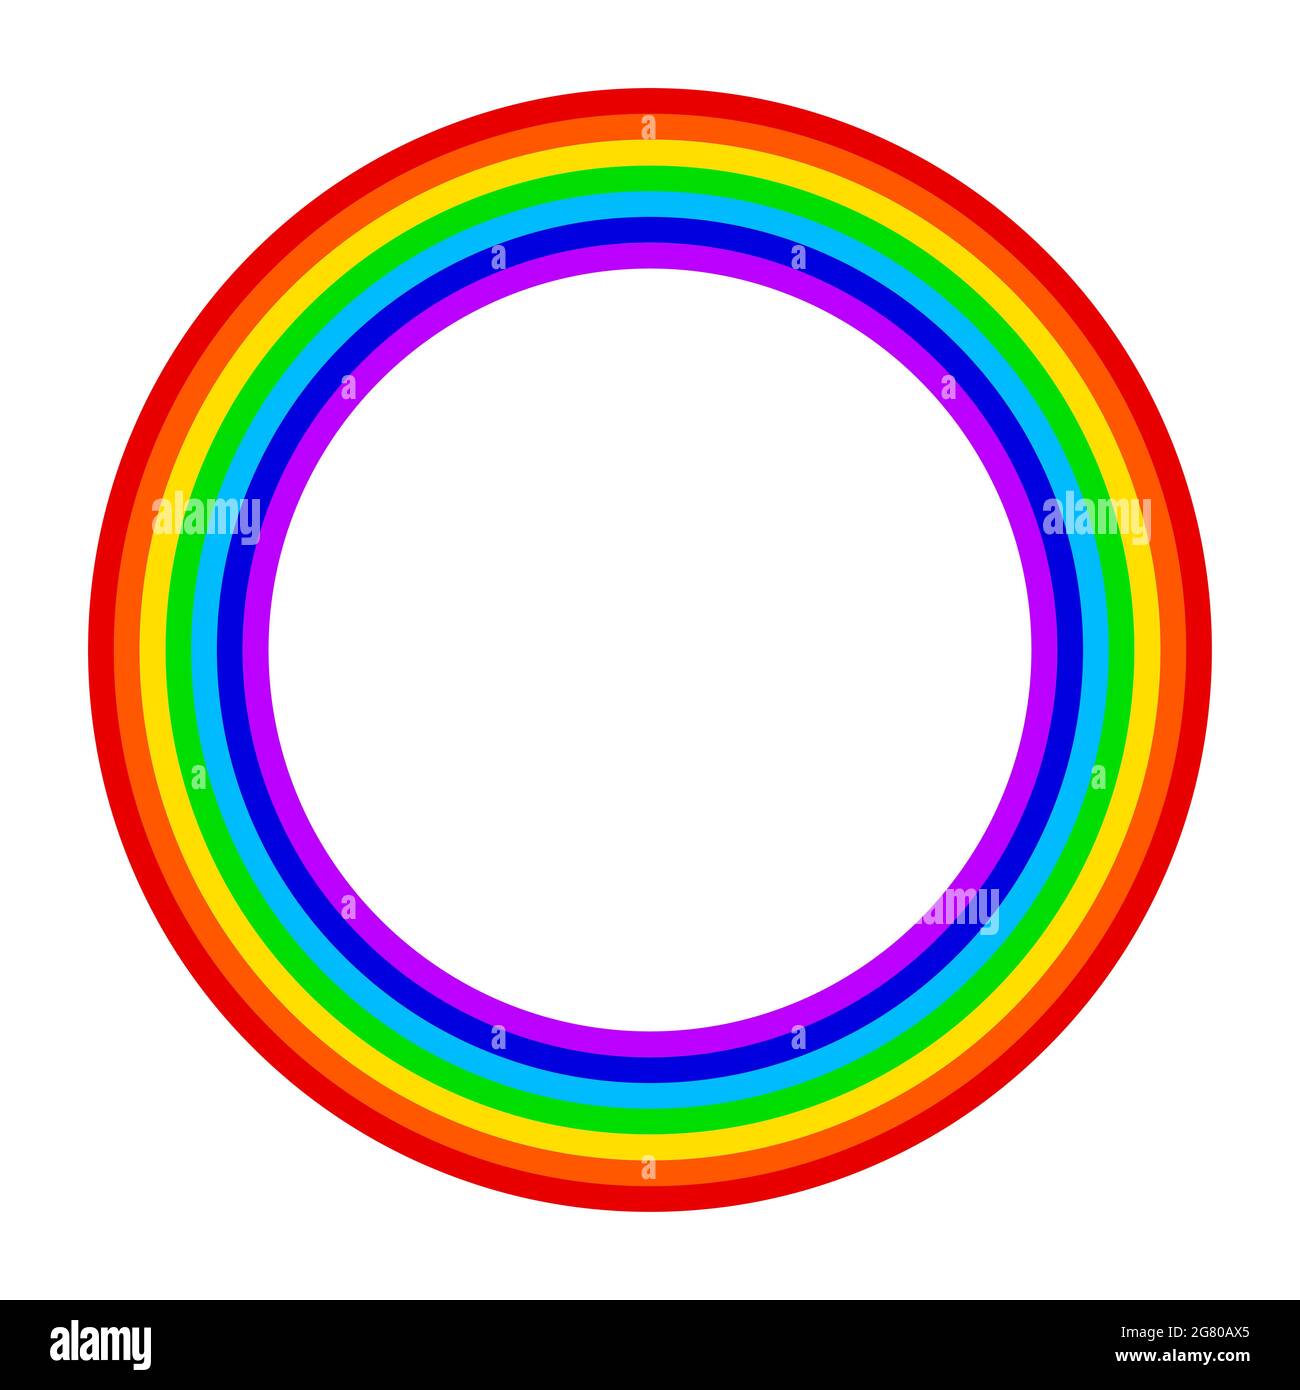 Arco iris de siete colores. Un fenómeno natural. Marco arco iris circular.  Ilustración Fotografía de stock - Alamy